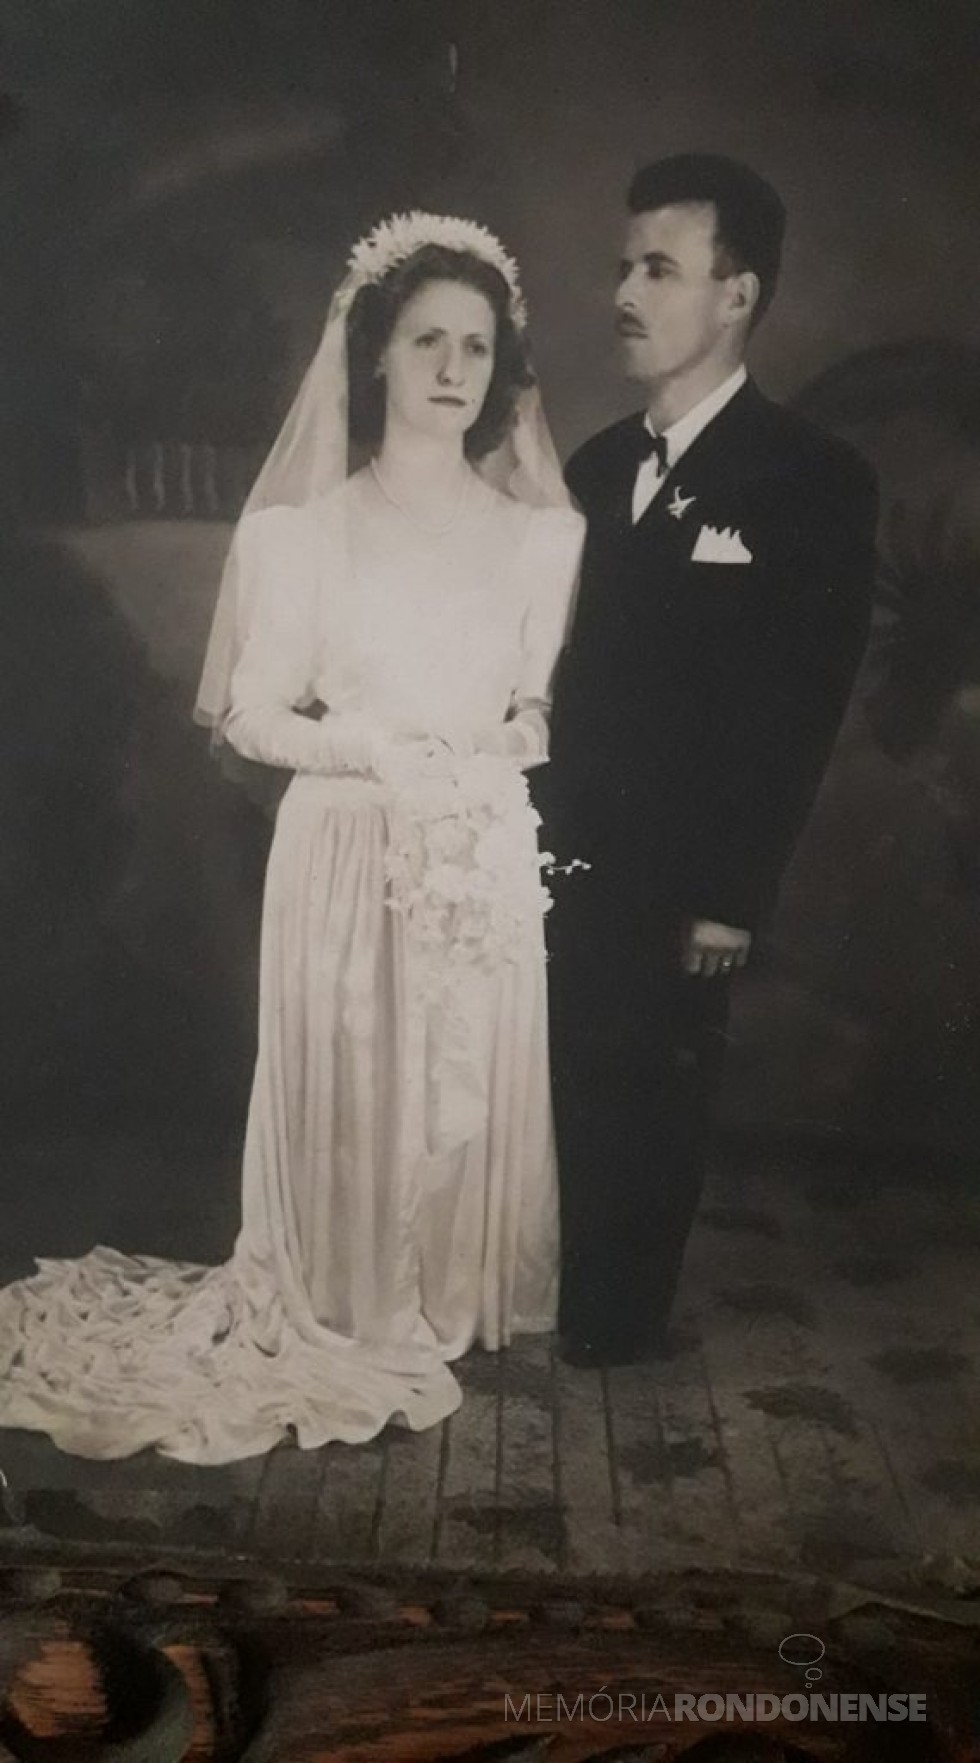 || Noivos Gisela Merlim e Arthur Mário Leduc, casal pioneiro de Marechal Cândido Rondon que casaramem dezembro de 1947.
Imagem: Acervo Líbera Leduc Wazlawick - FOTO 3 -